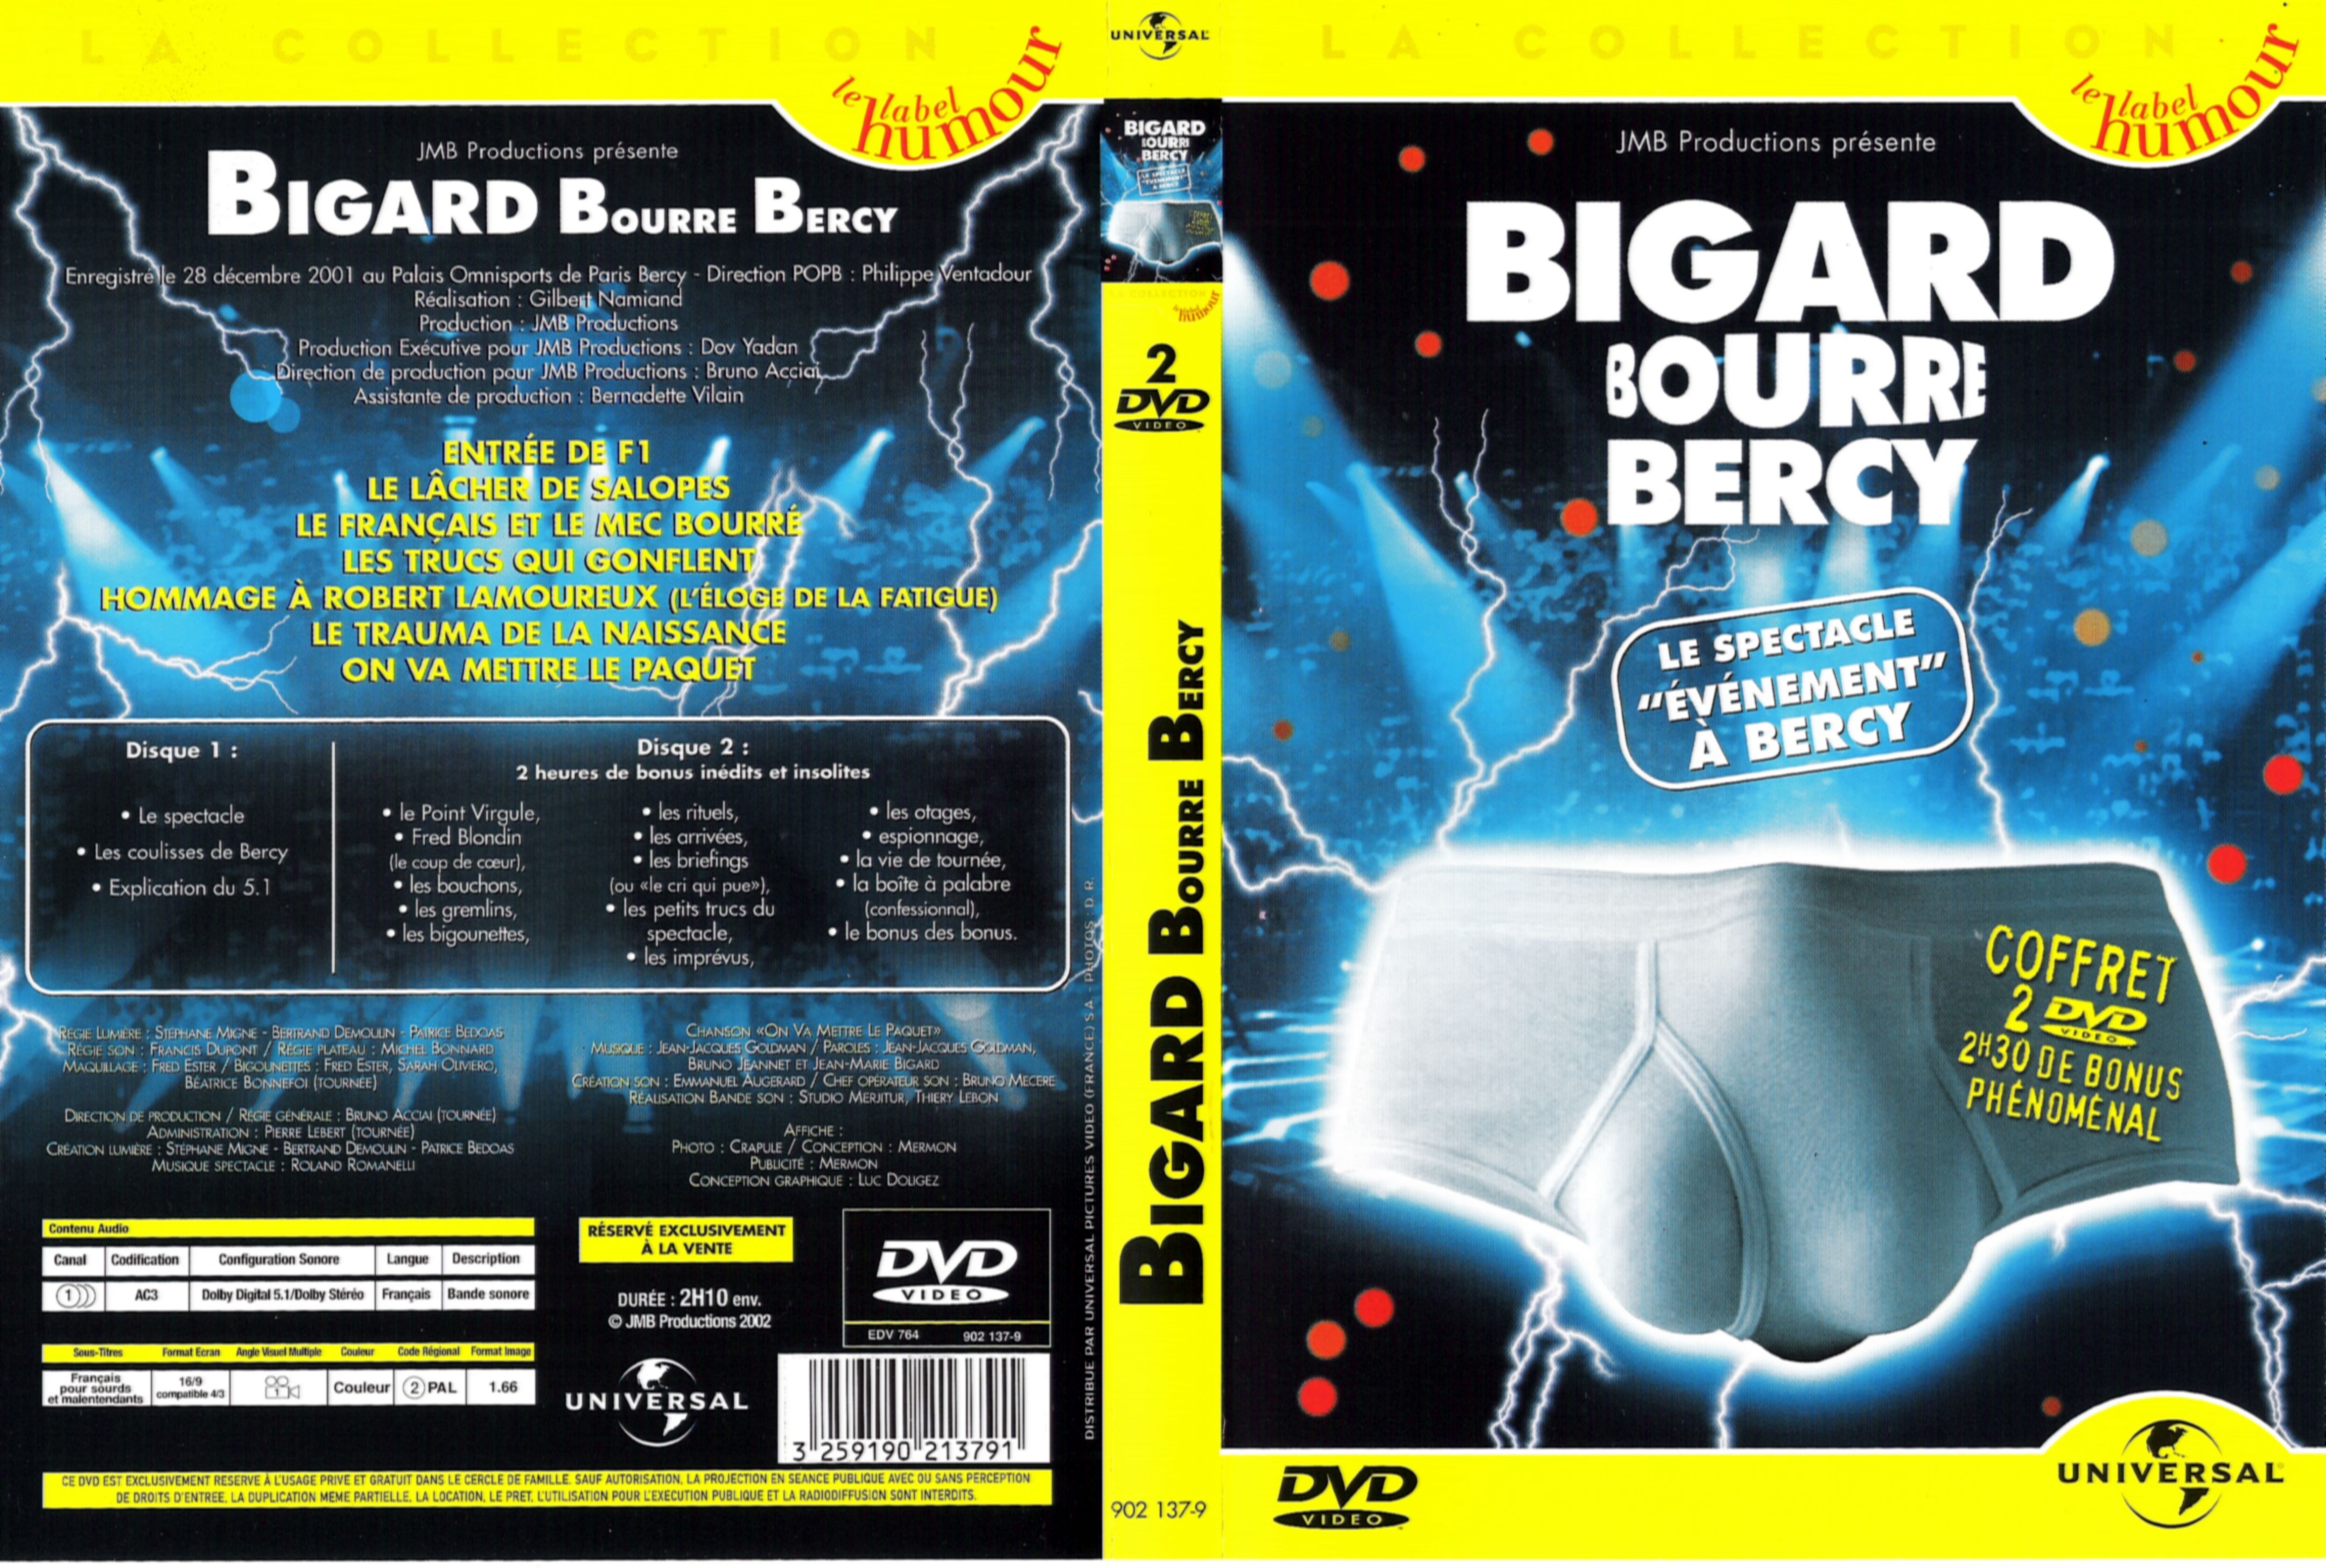 Jaquette DVD Bigard bourre Bercy